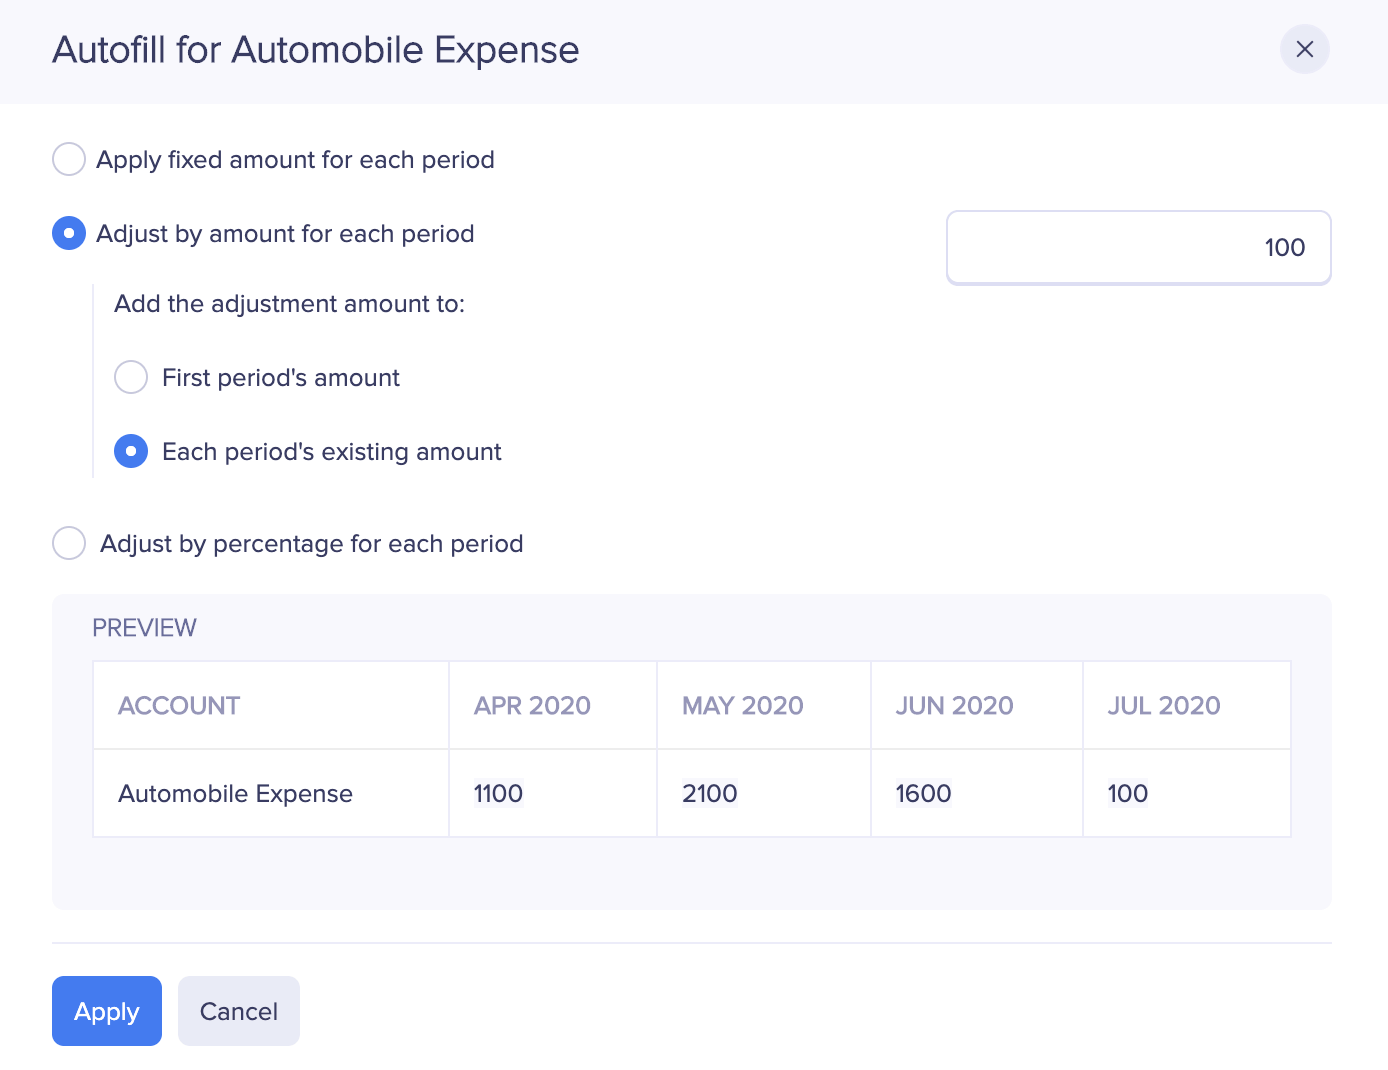 Autofill budget amount